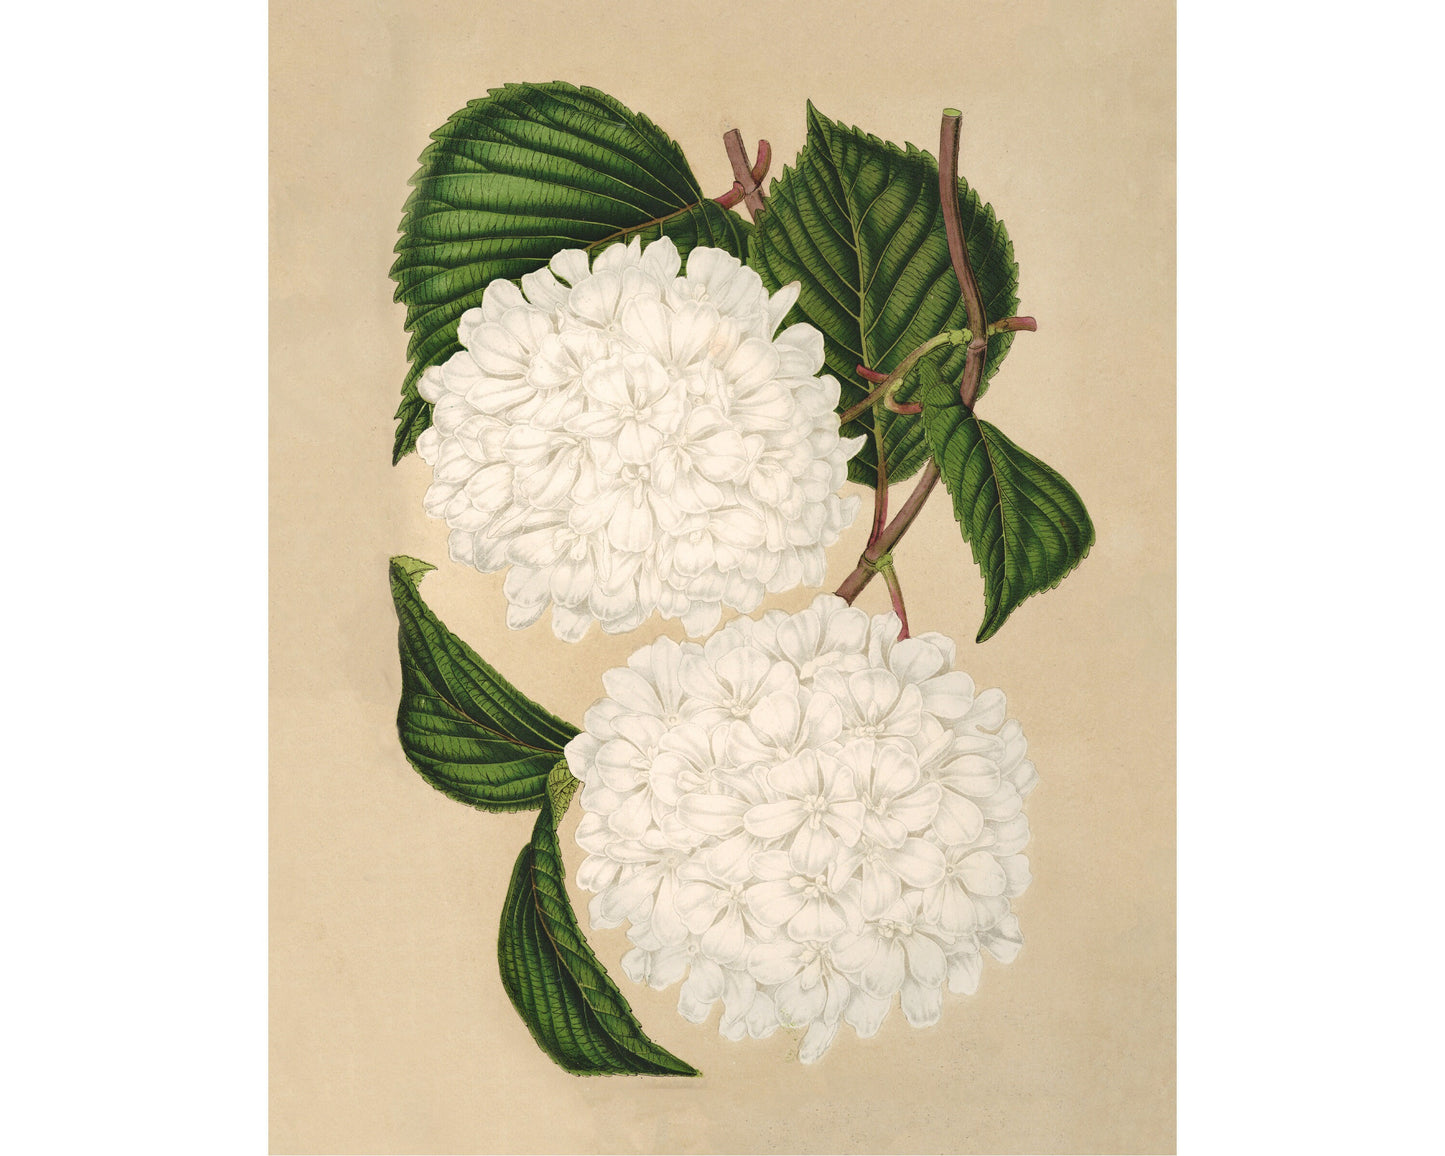 Japanese snowball flower | Vintage botany | Natural history print | Modern vintage décor | Eco-friendly gift